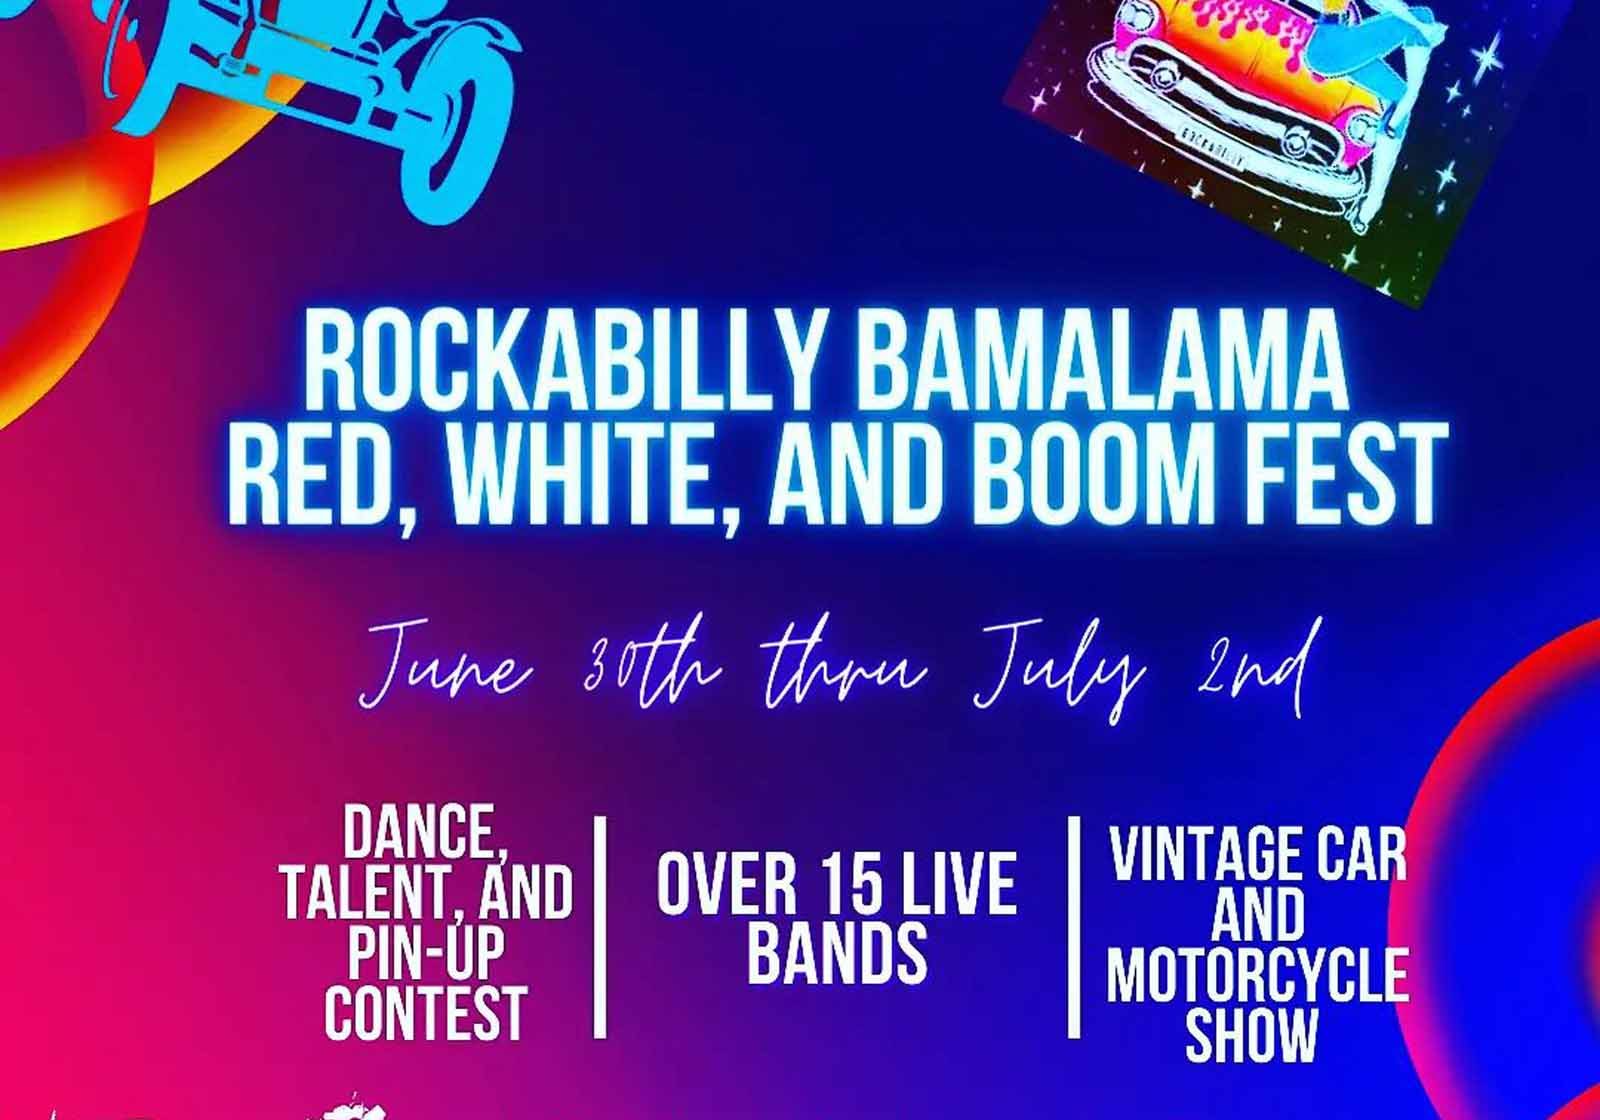 Rockabilly Bamalama Announced For Robertsdale